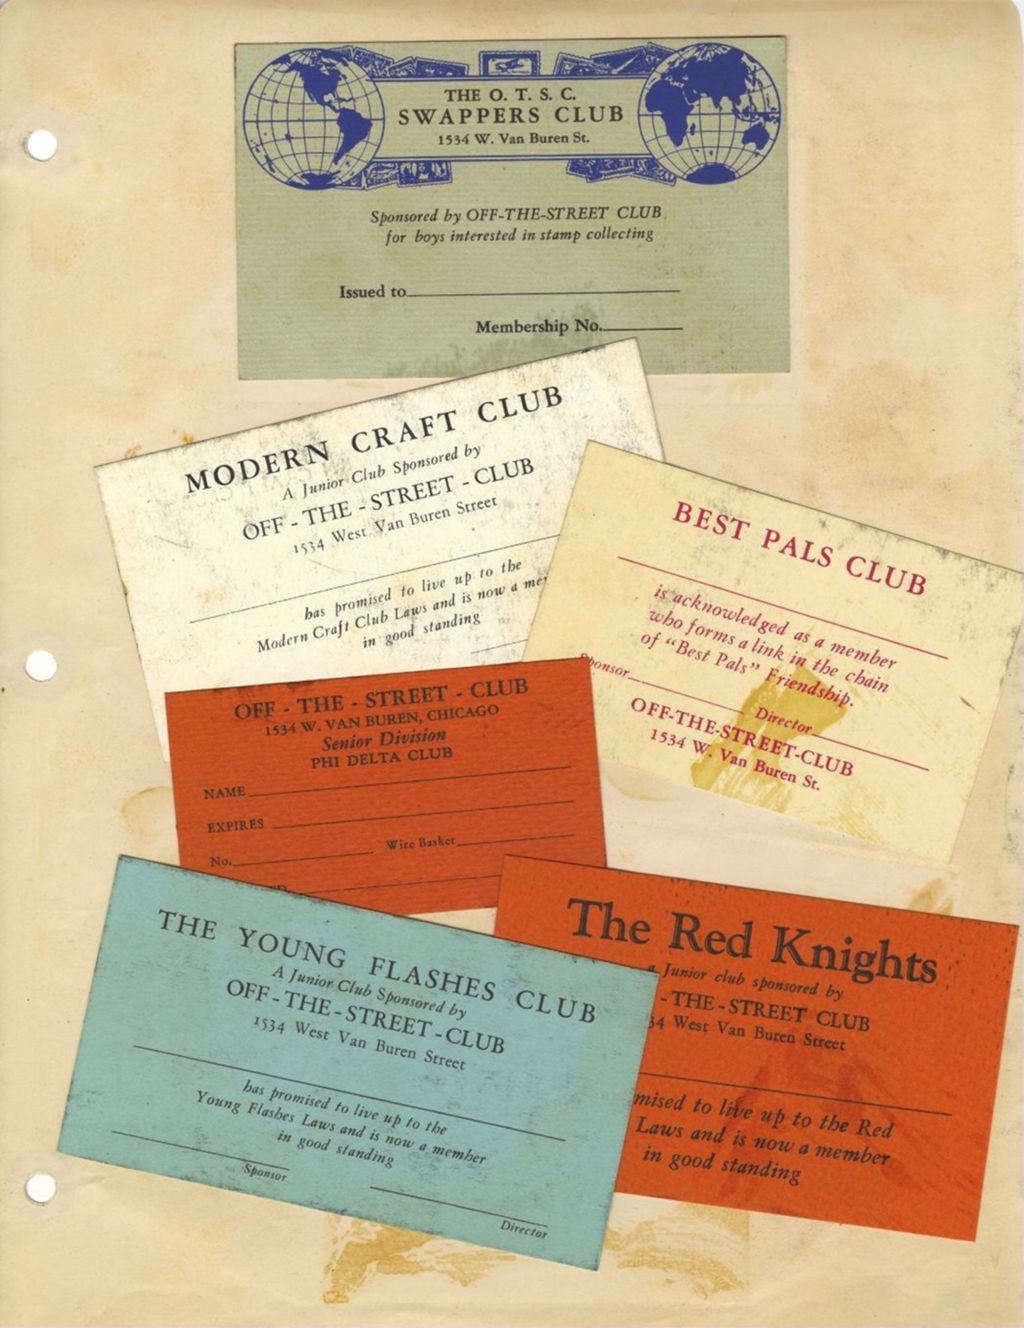 Miniature of Off-The-Street Club membership cards